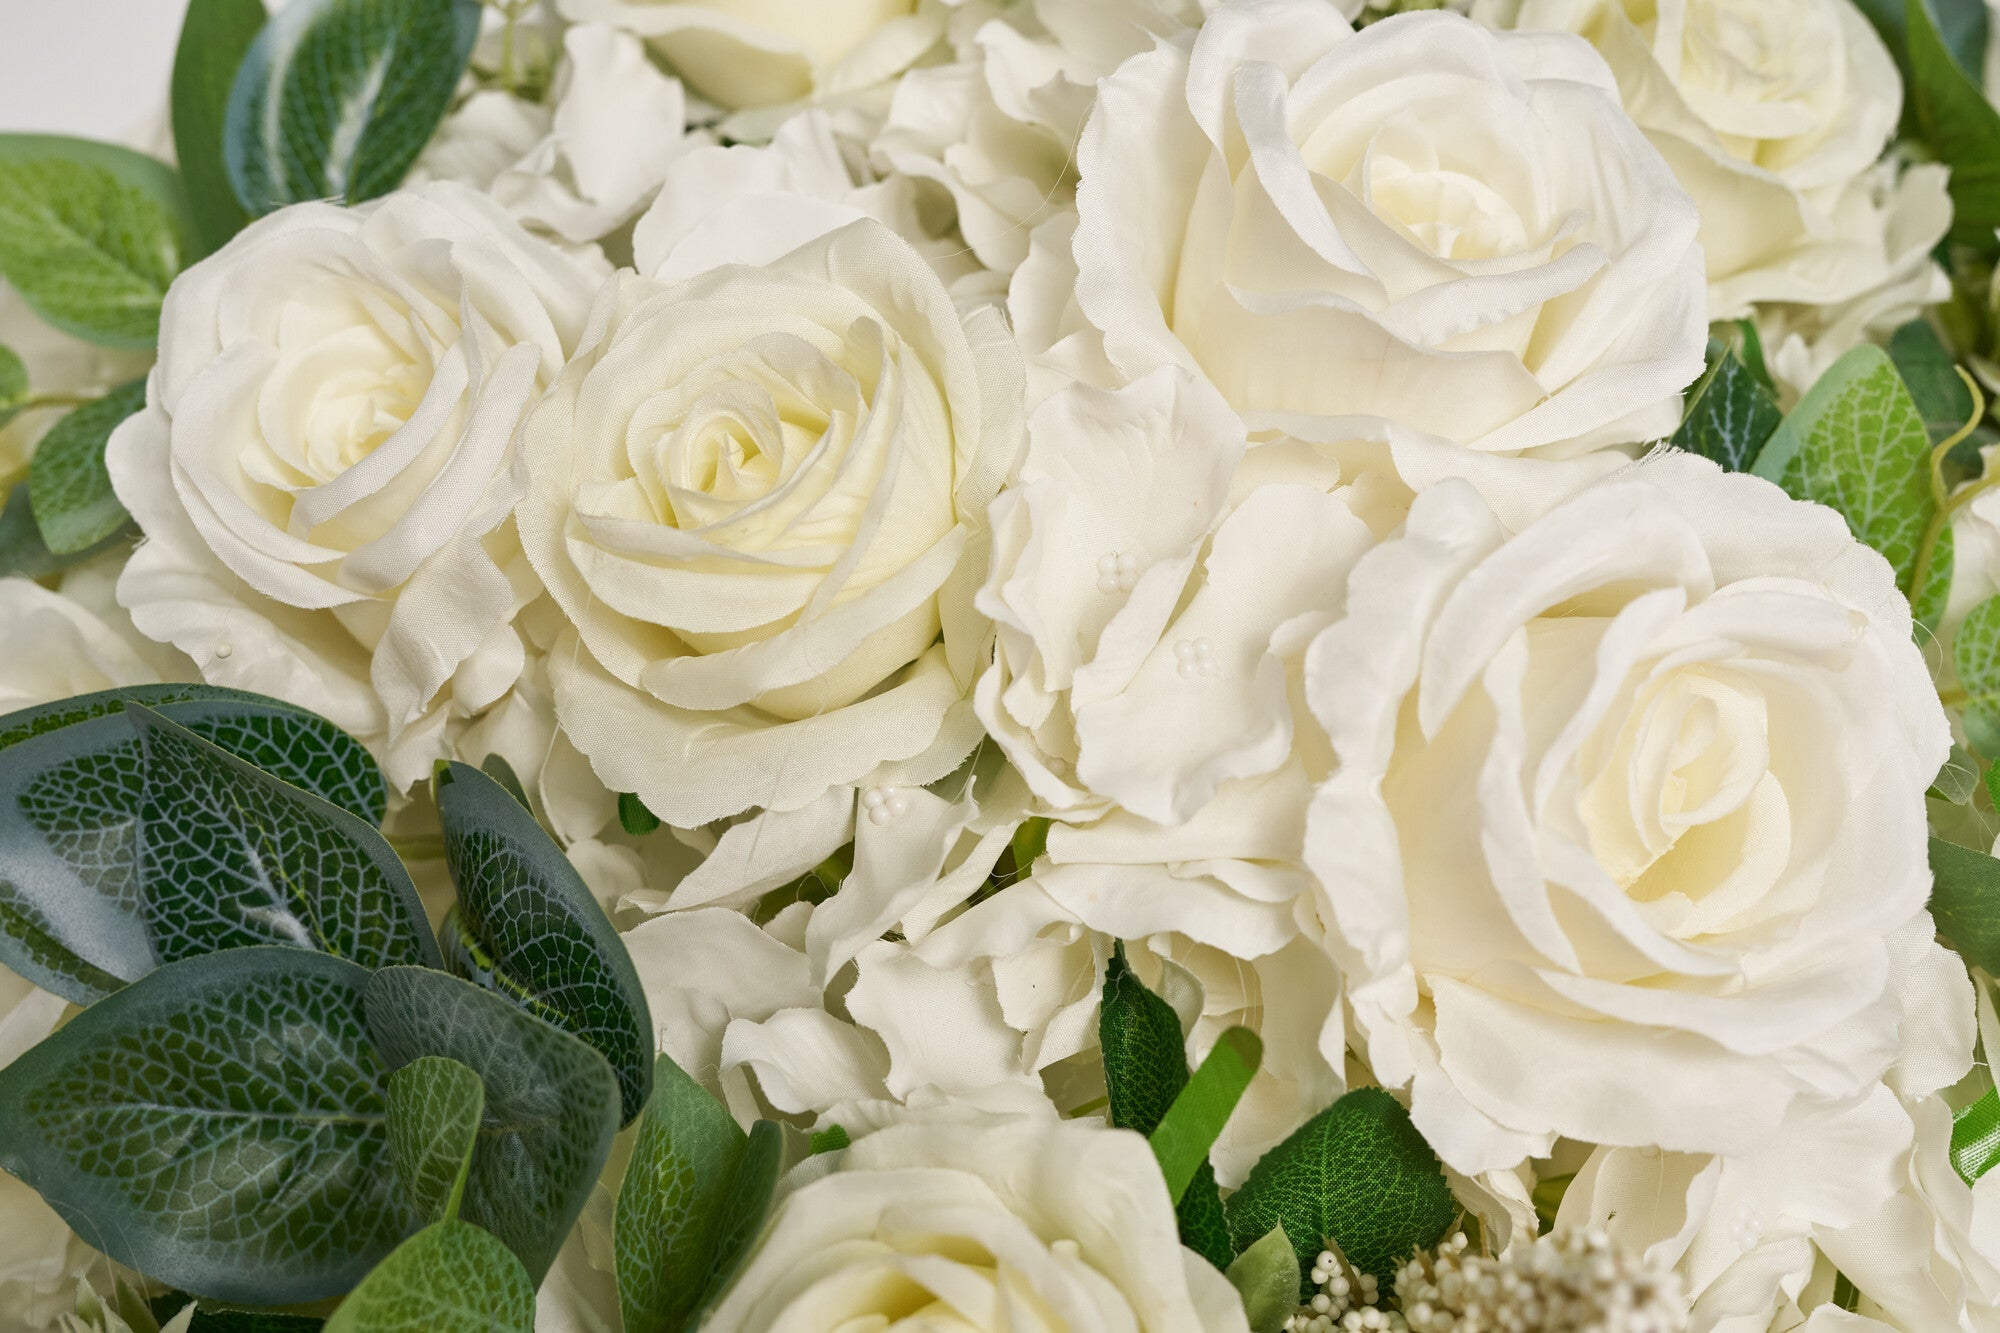 Flower Ball White Rose & Small Hydrangea Wedding Proposal Party Centerpieces Decor